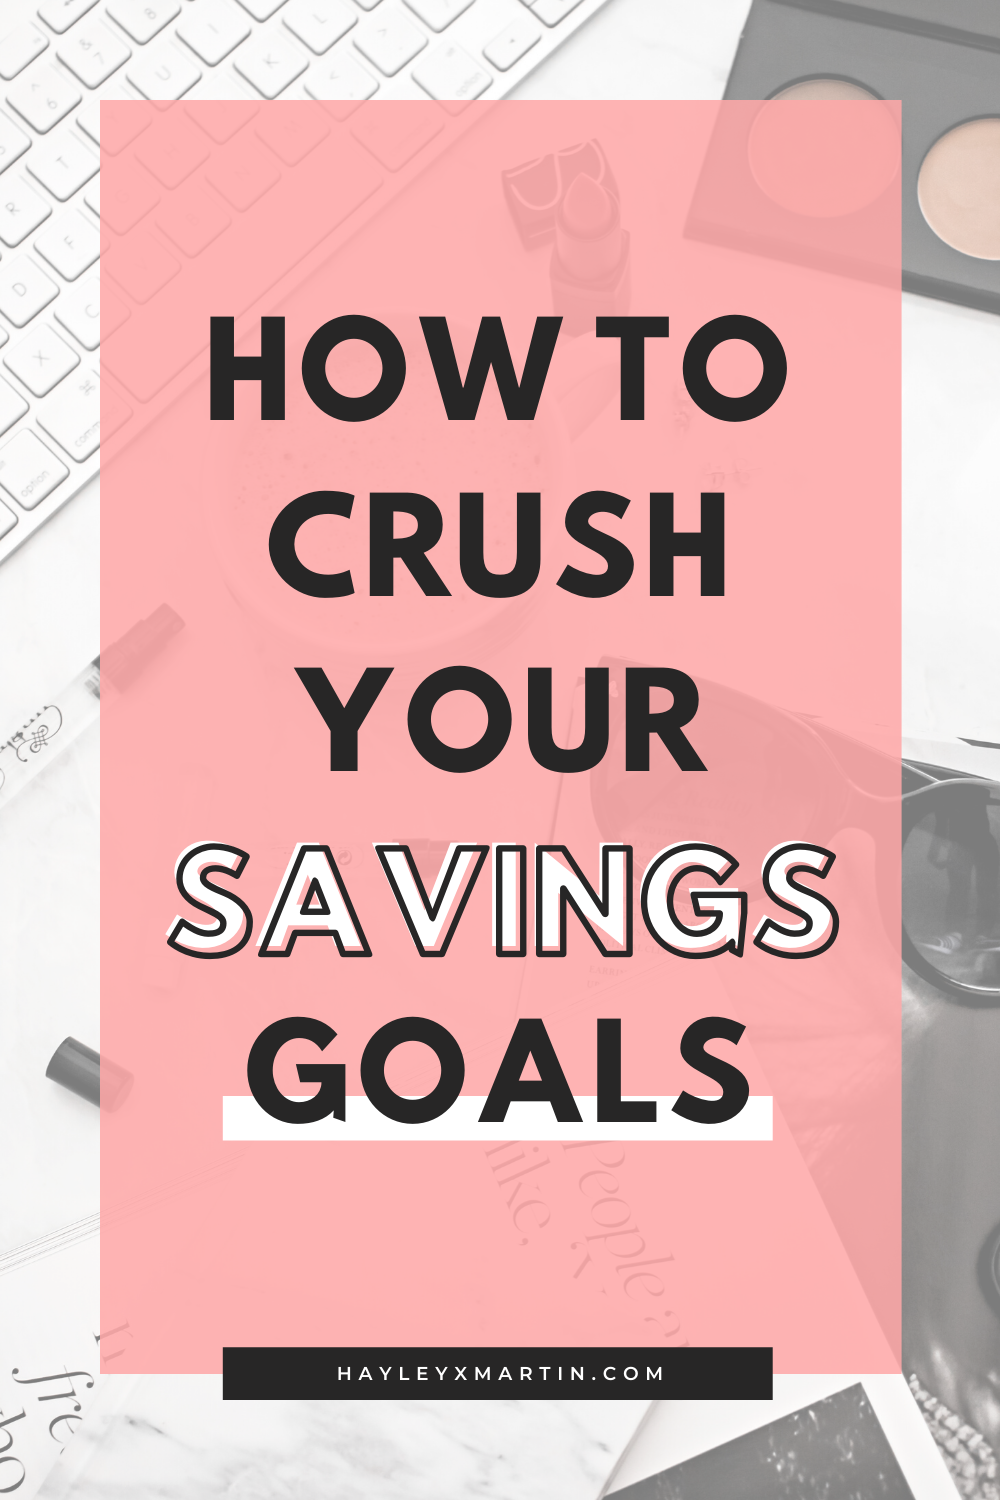 HOW TO CRUSH YOUR SAVINGS GOALS | HAYLEYXMARTIN